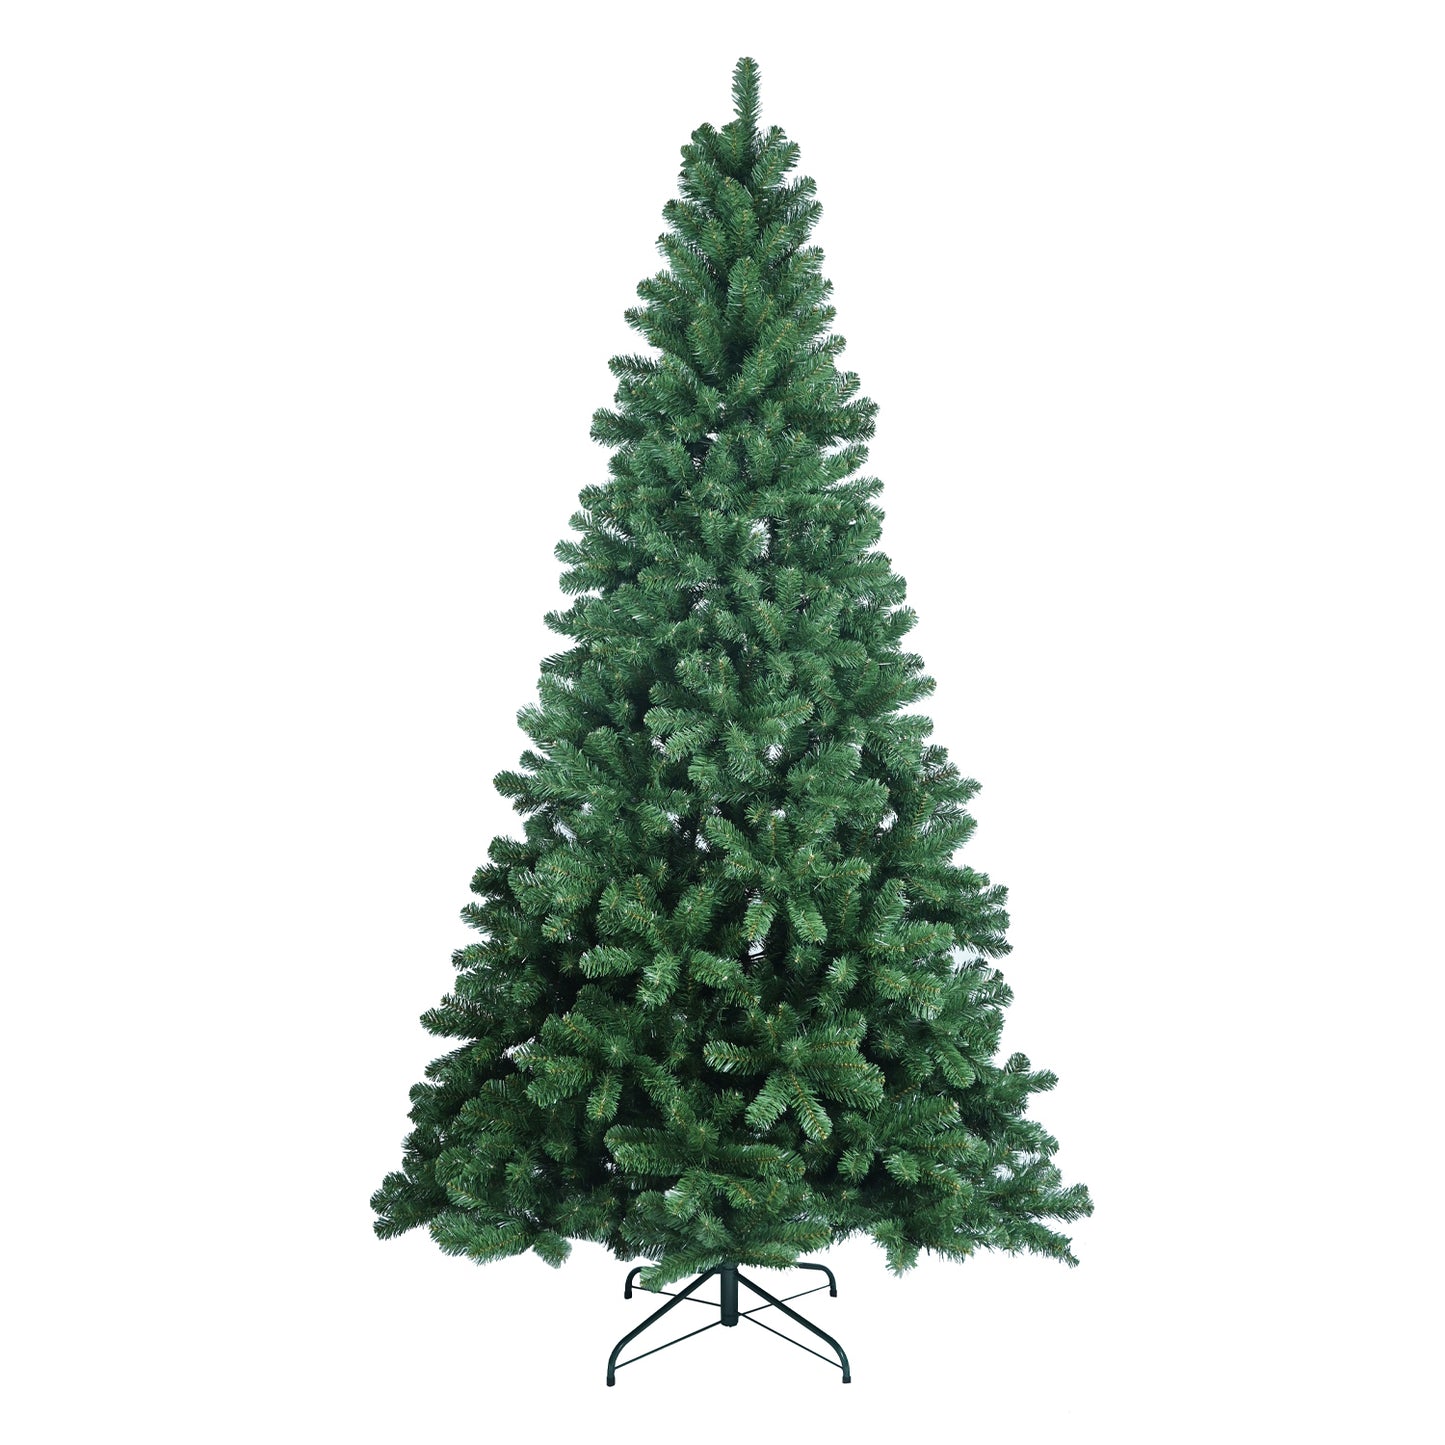 Convenient Automatic Xmas Decoration Festive Magic PVC Christmas Tree